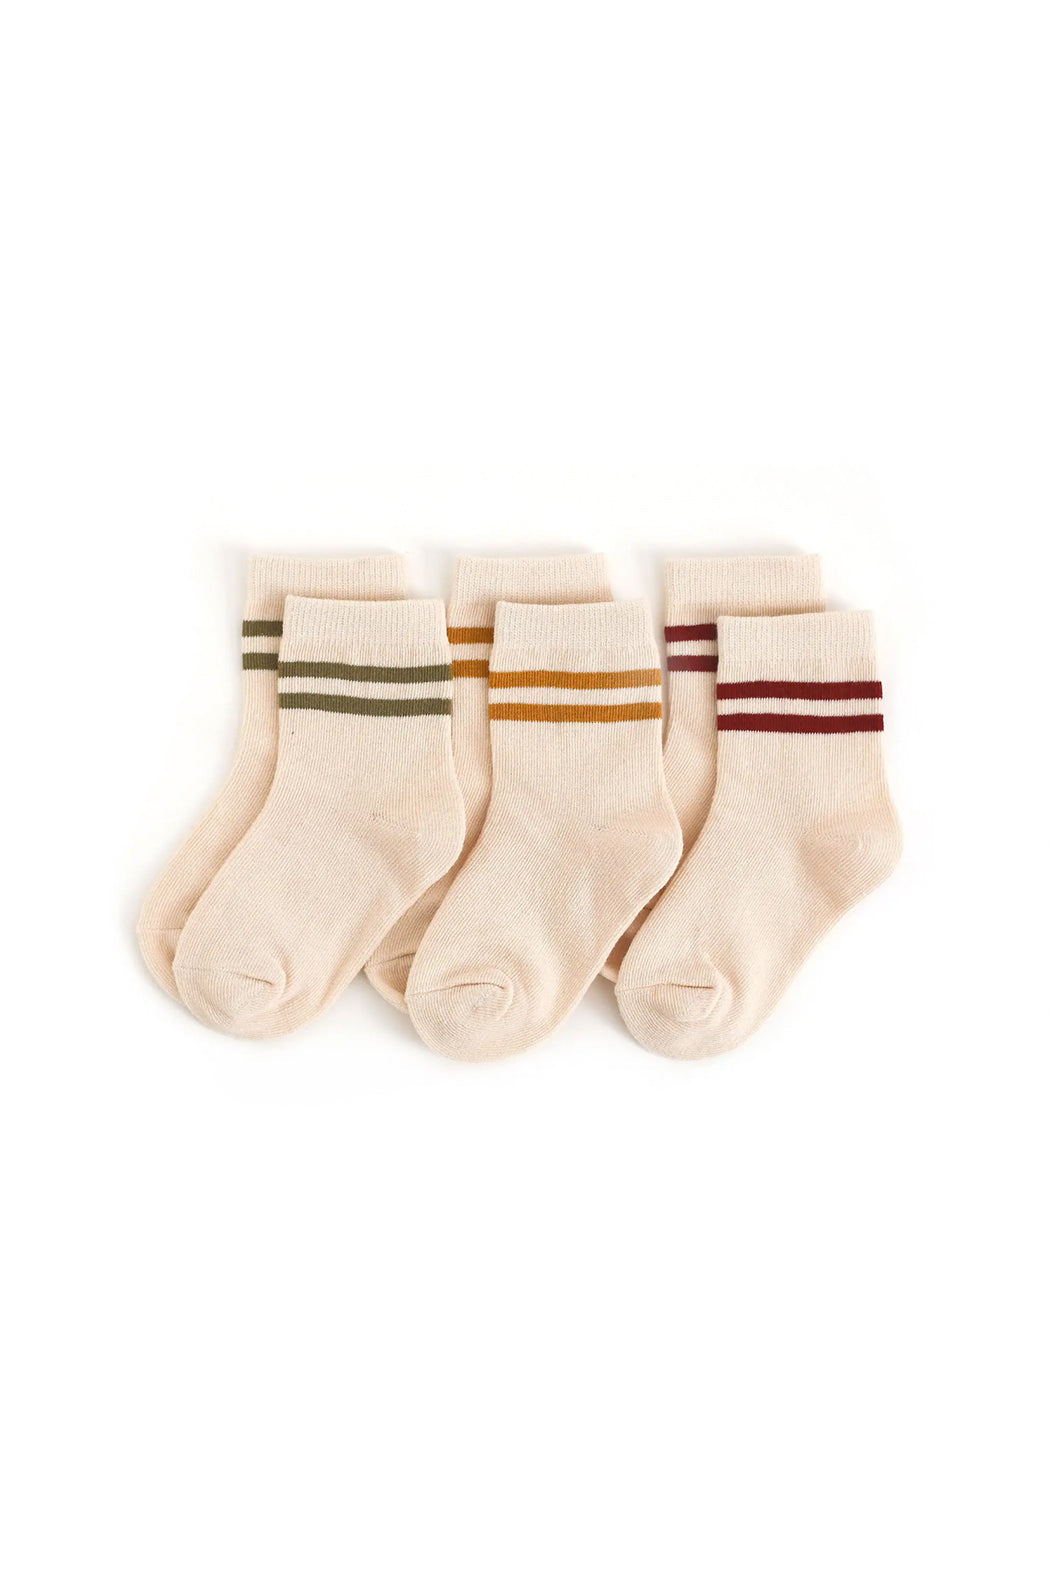 Little Stocking Co Vanilla Striped Midi Sock 3-Pack